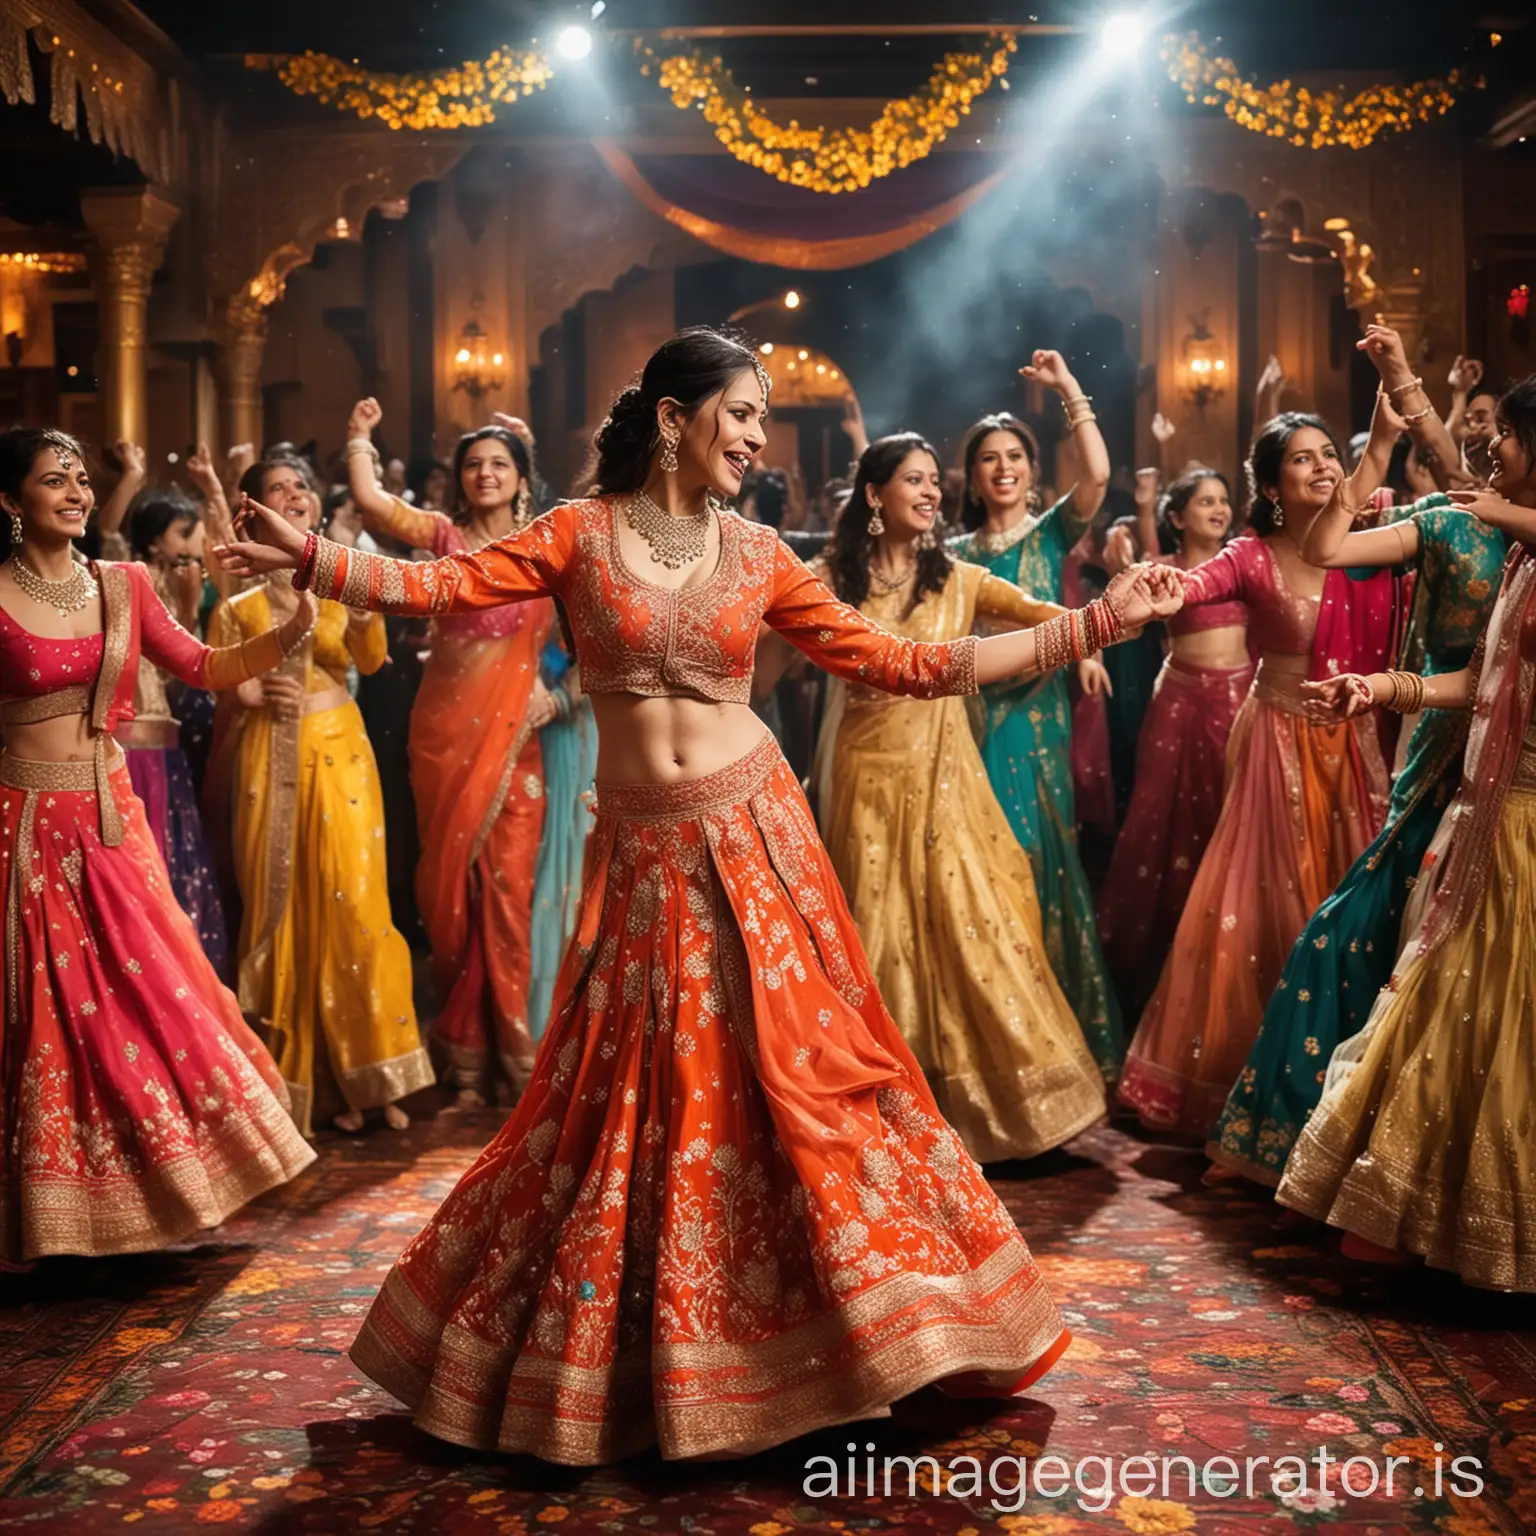 Vibrant-Bollywood-Family-Dance-Celebration